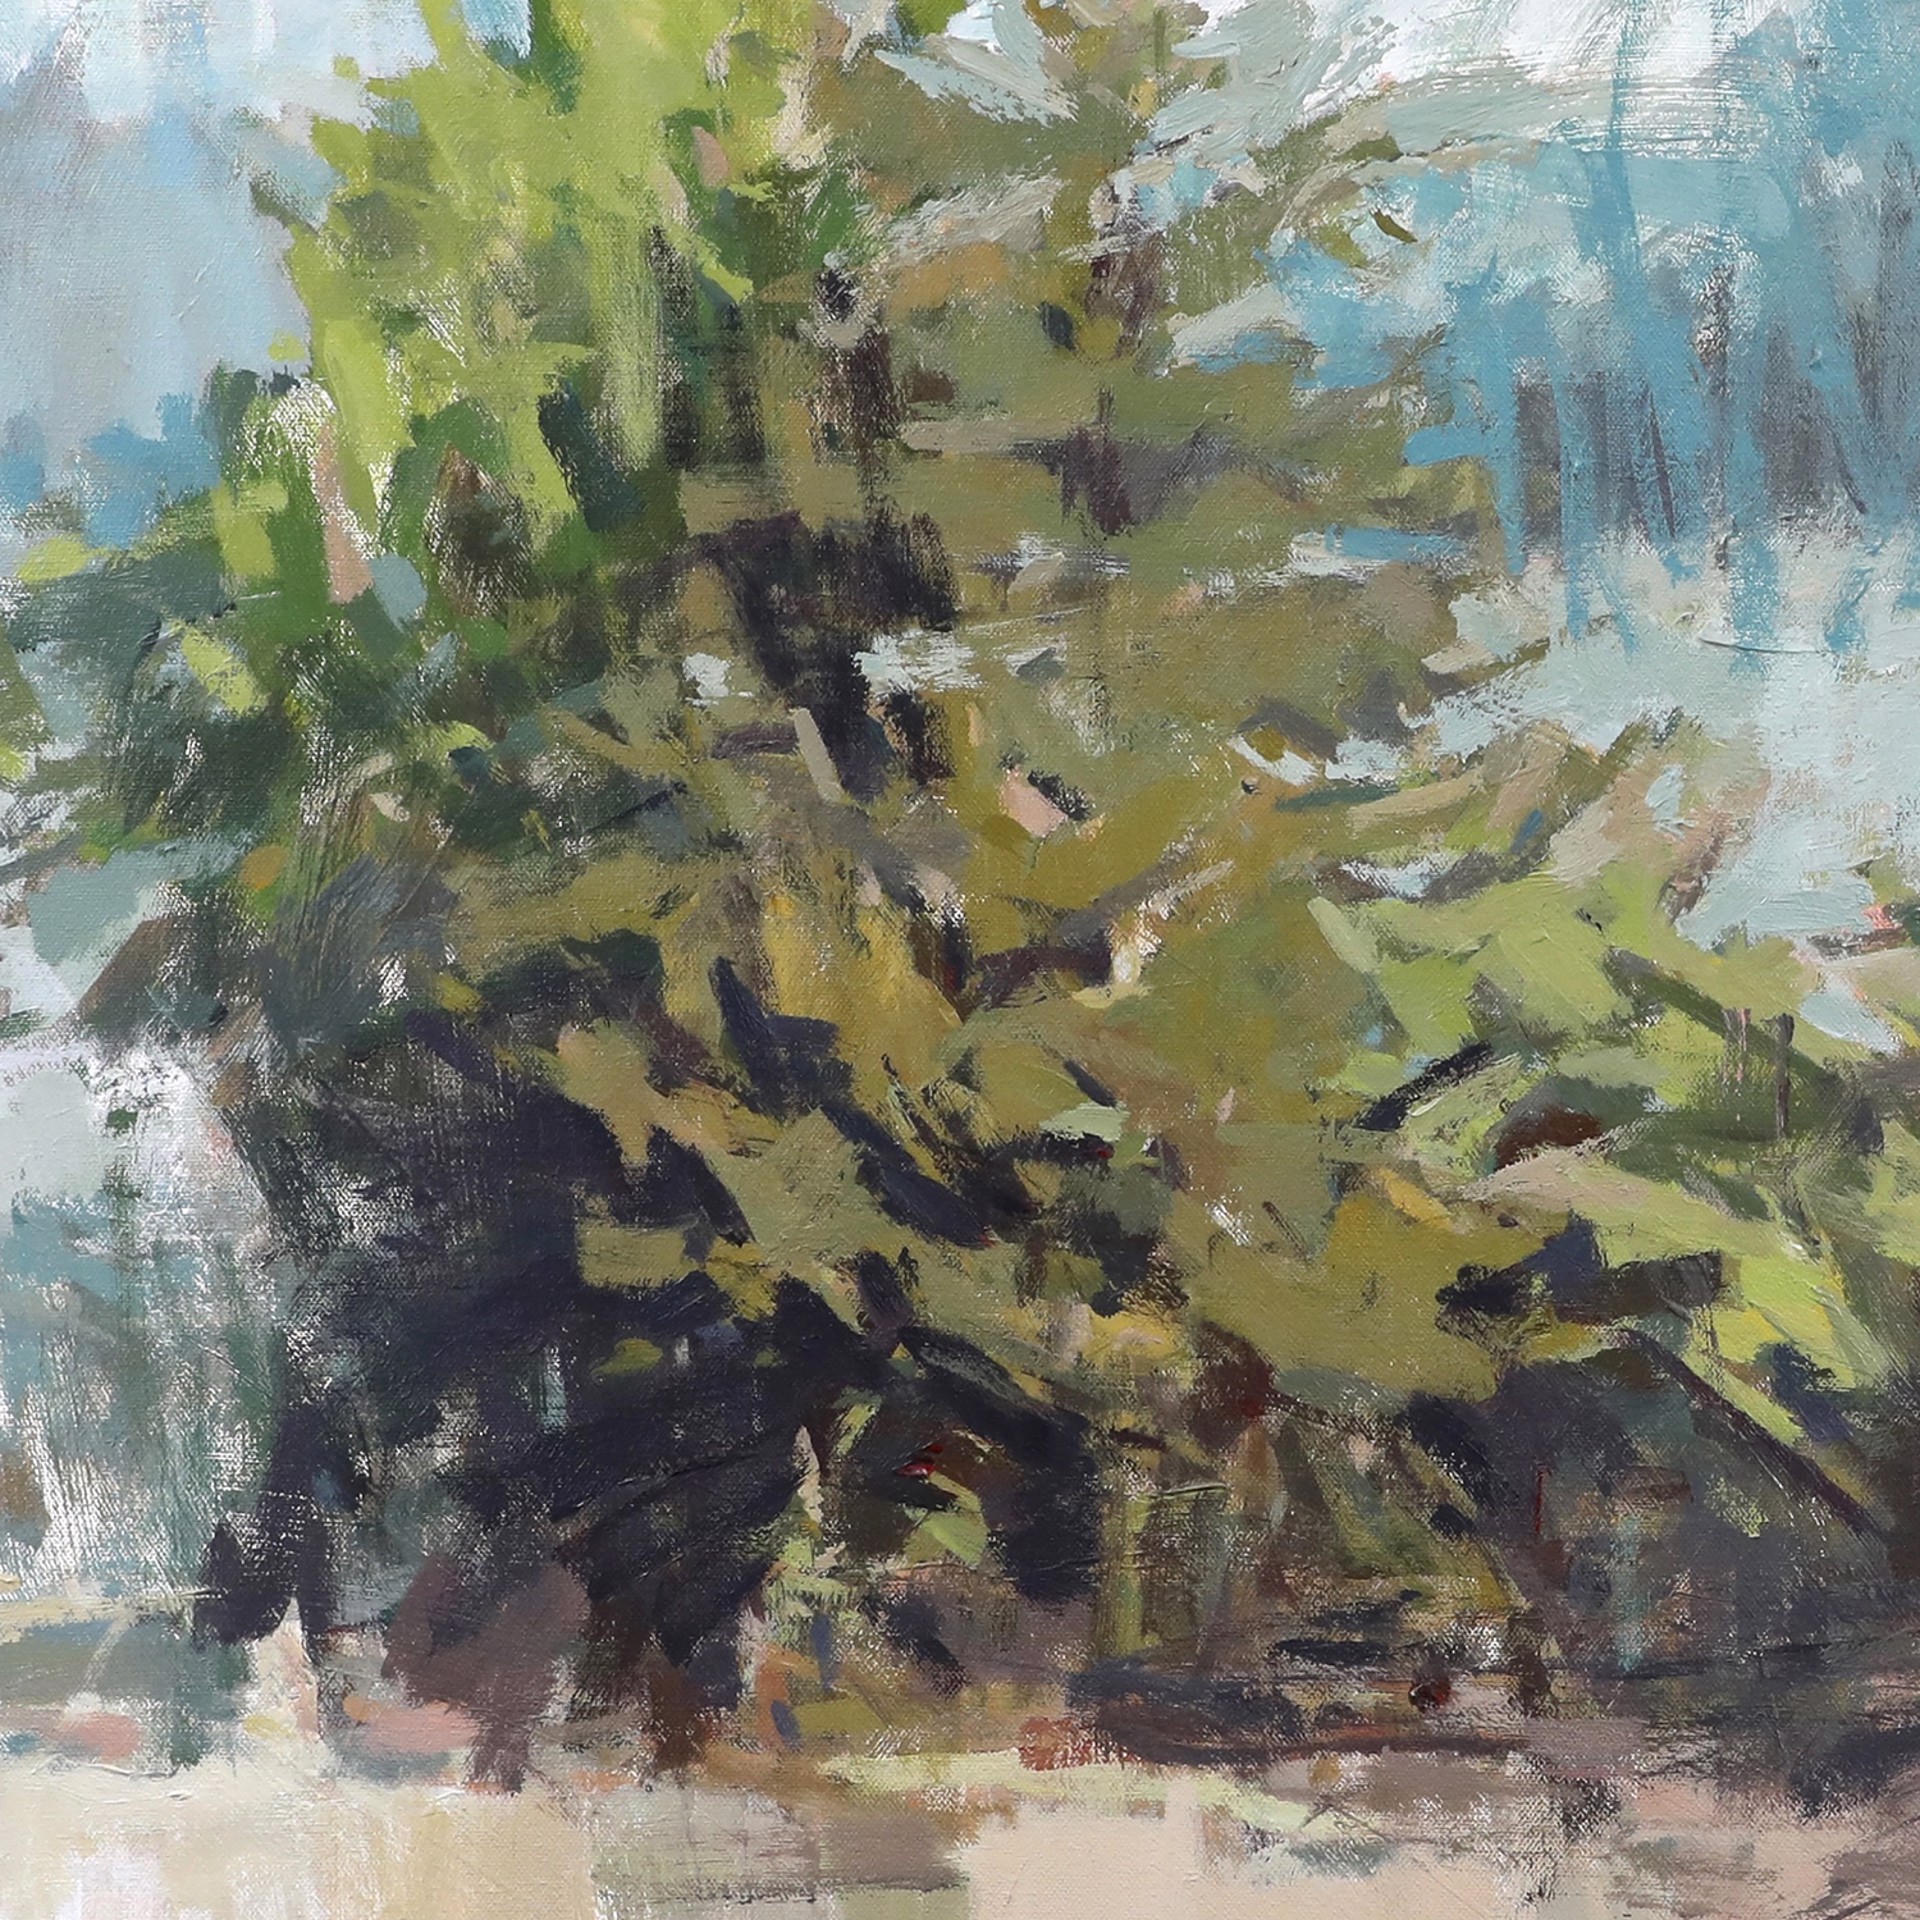 Piney Grove by Scotty Peek